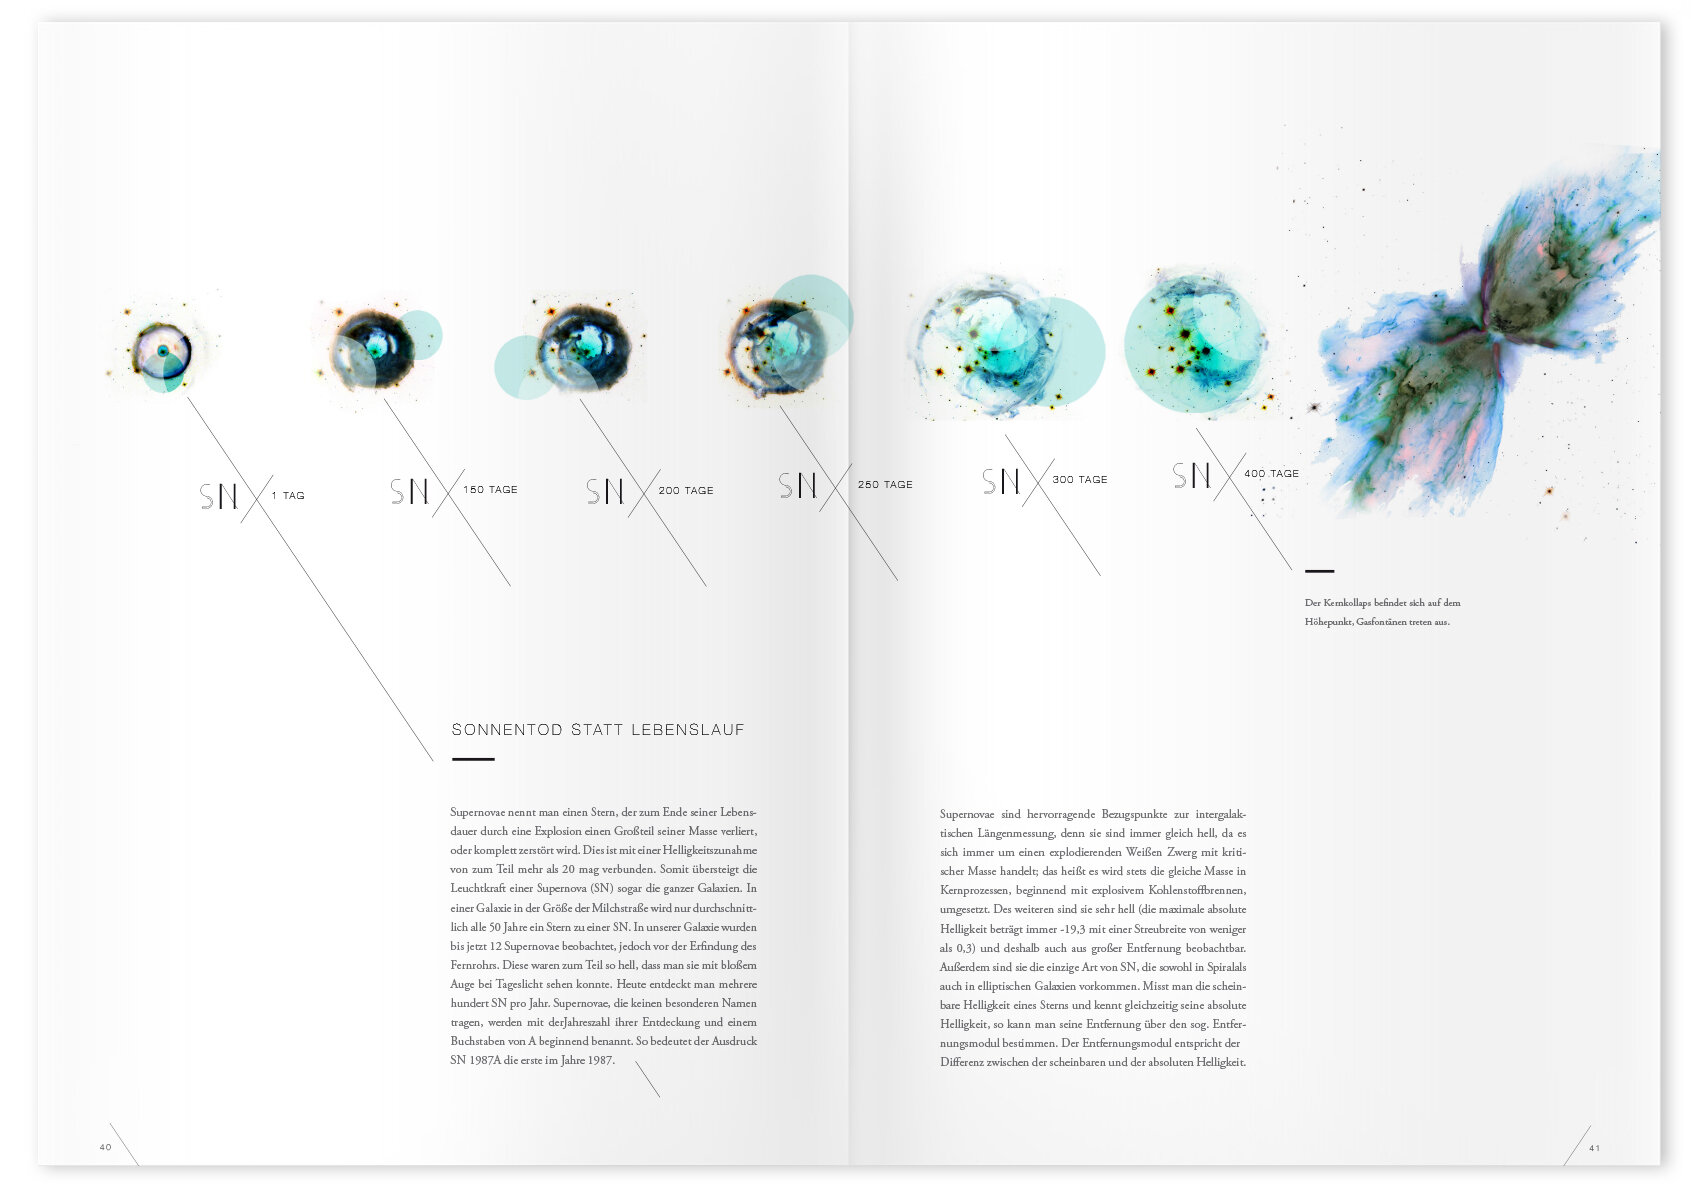 09_Cosmos-Magazin_hsrm-Hochschule-RheinMain_Editorial-Design_Grafikdesign_Gloria-Kison.jpg